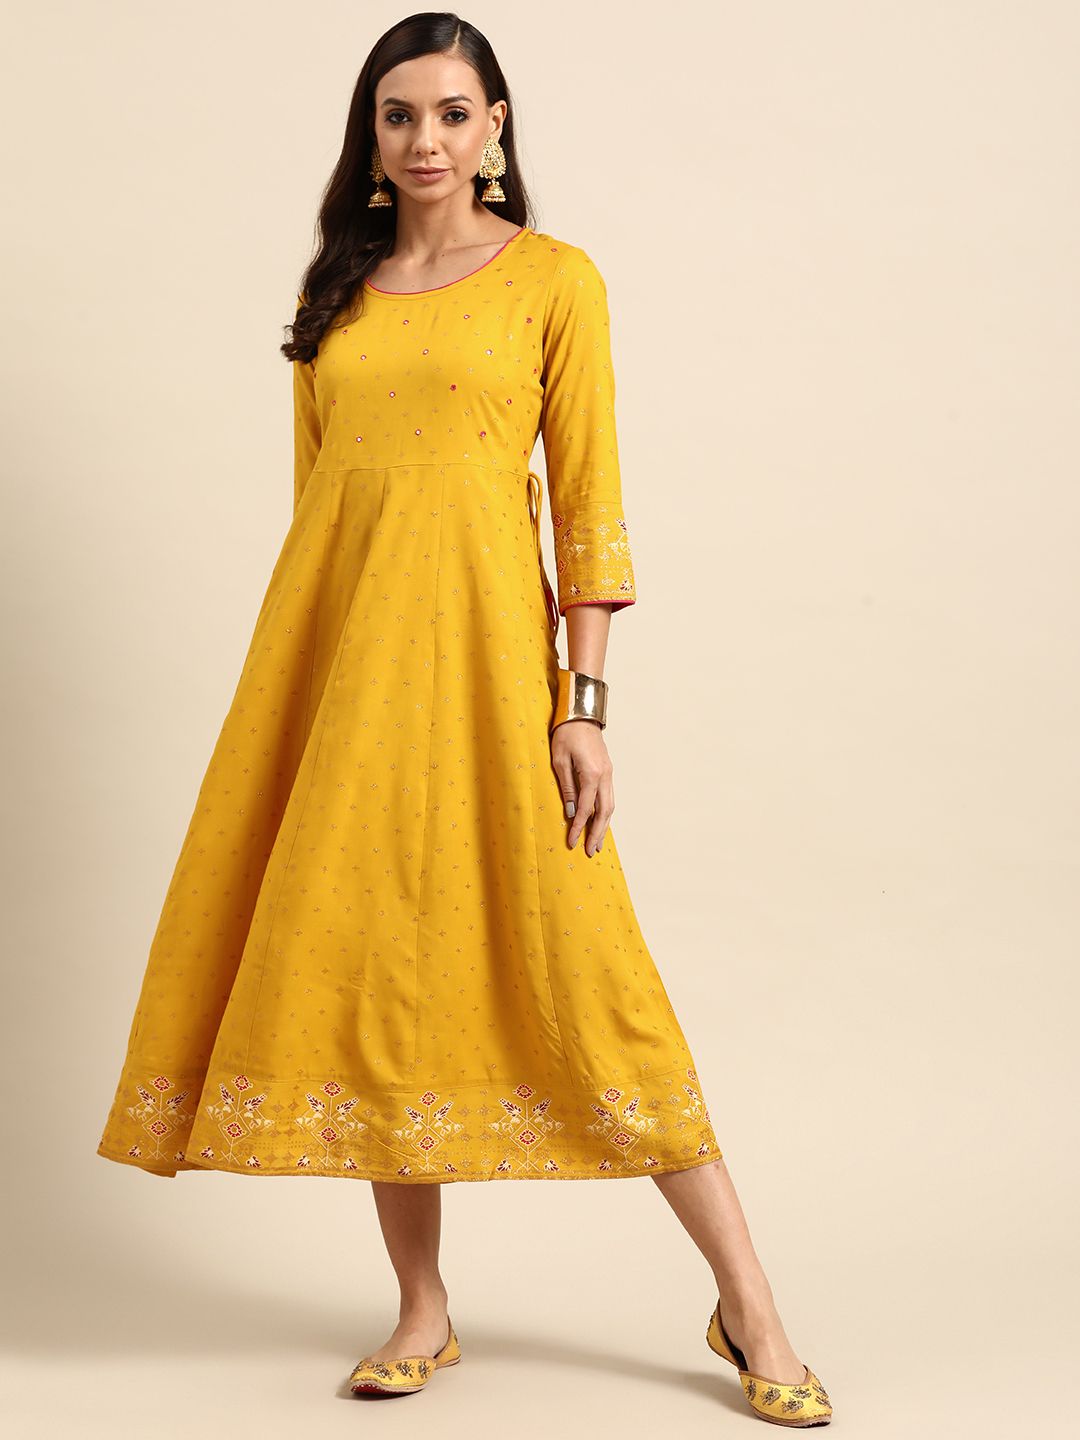 GERUA Yellow Ethnic Midi Dress Price in India